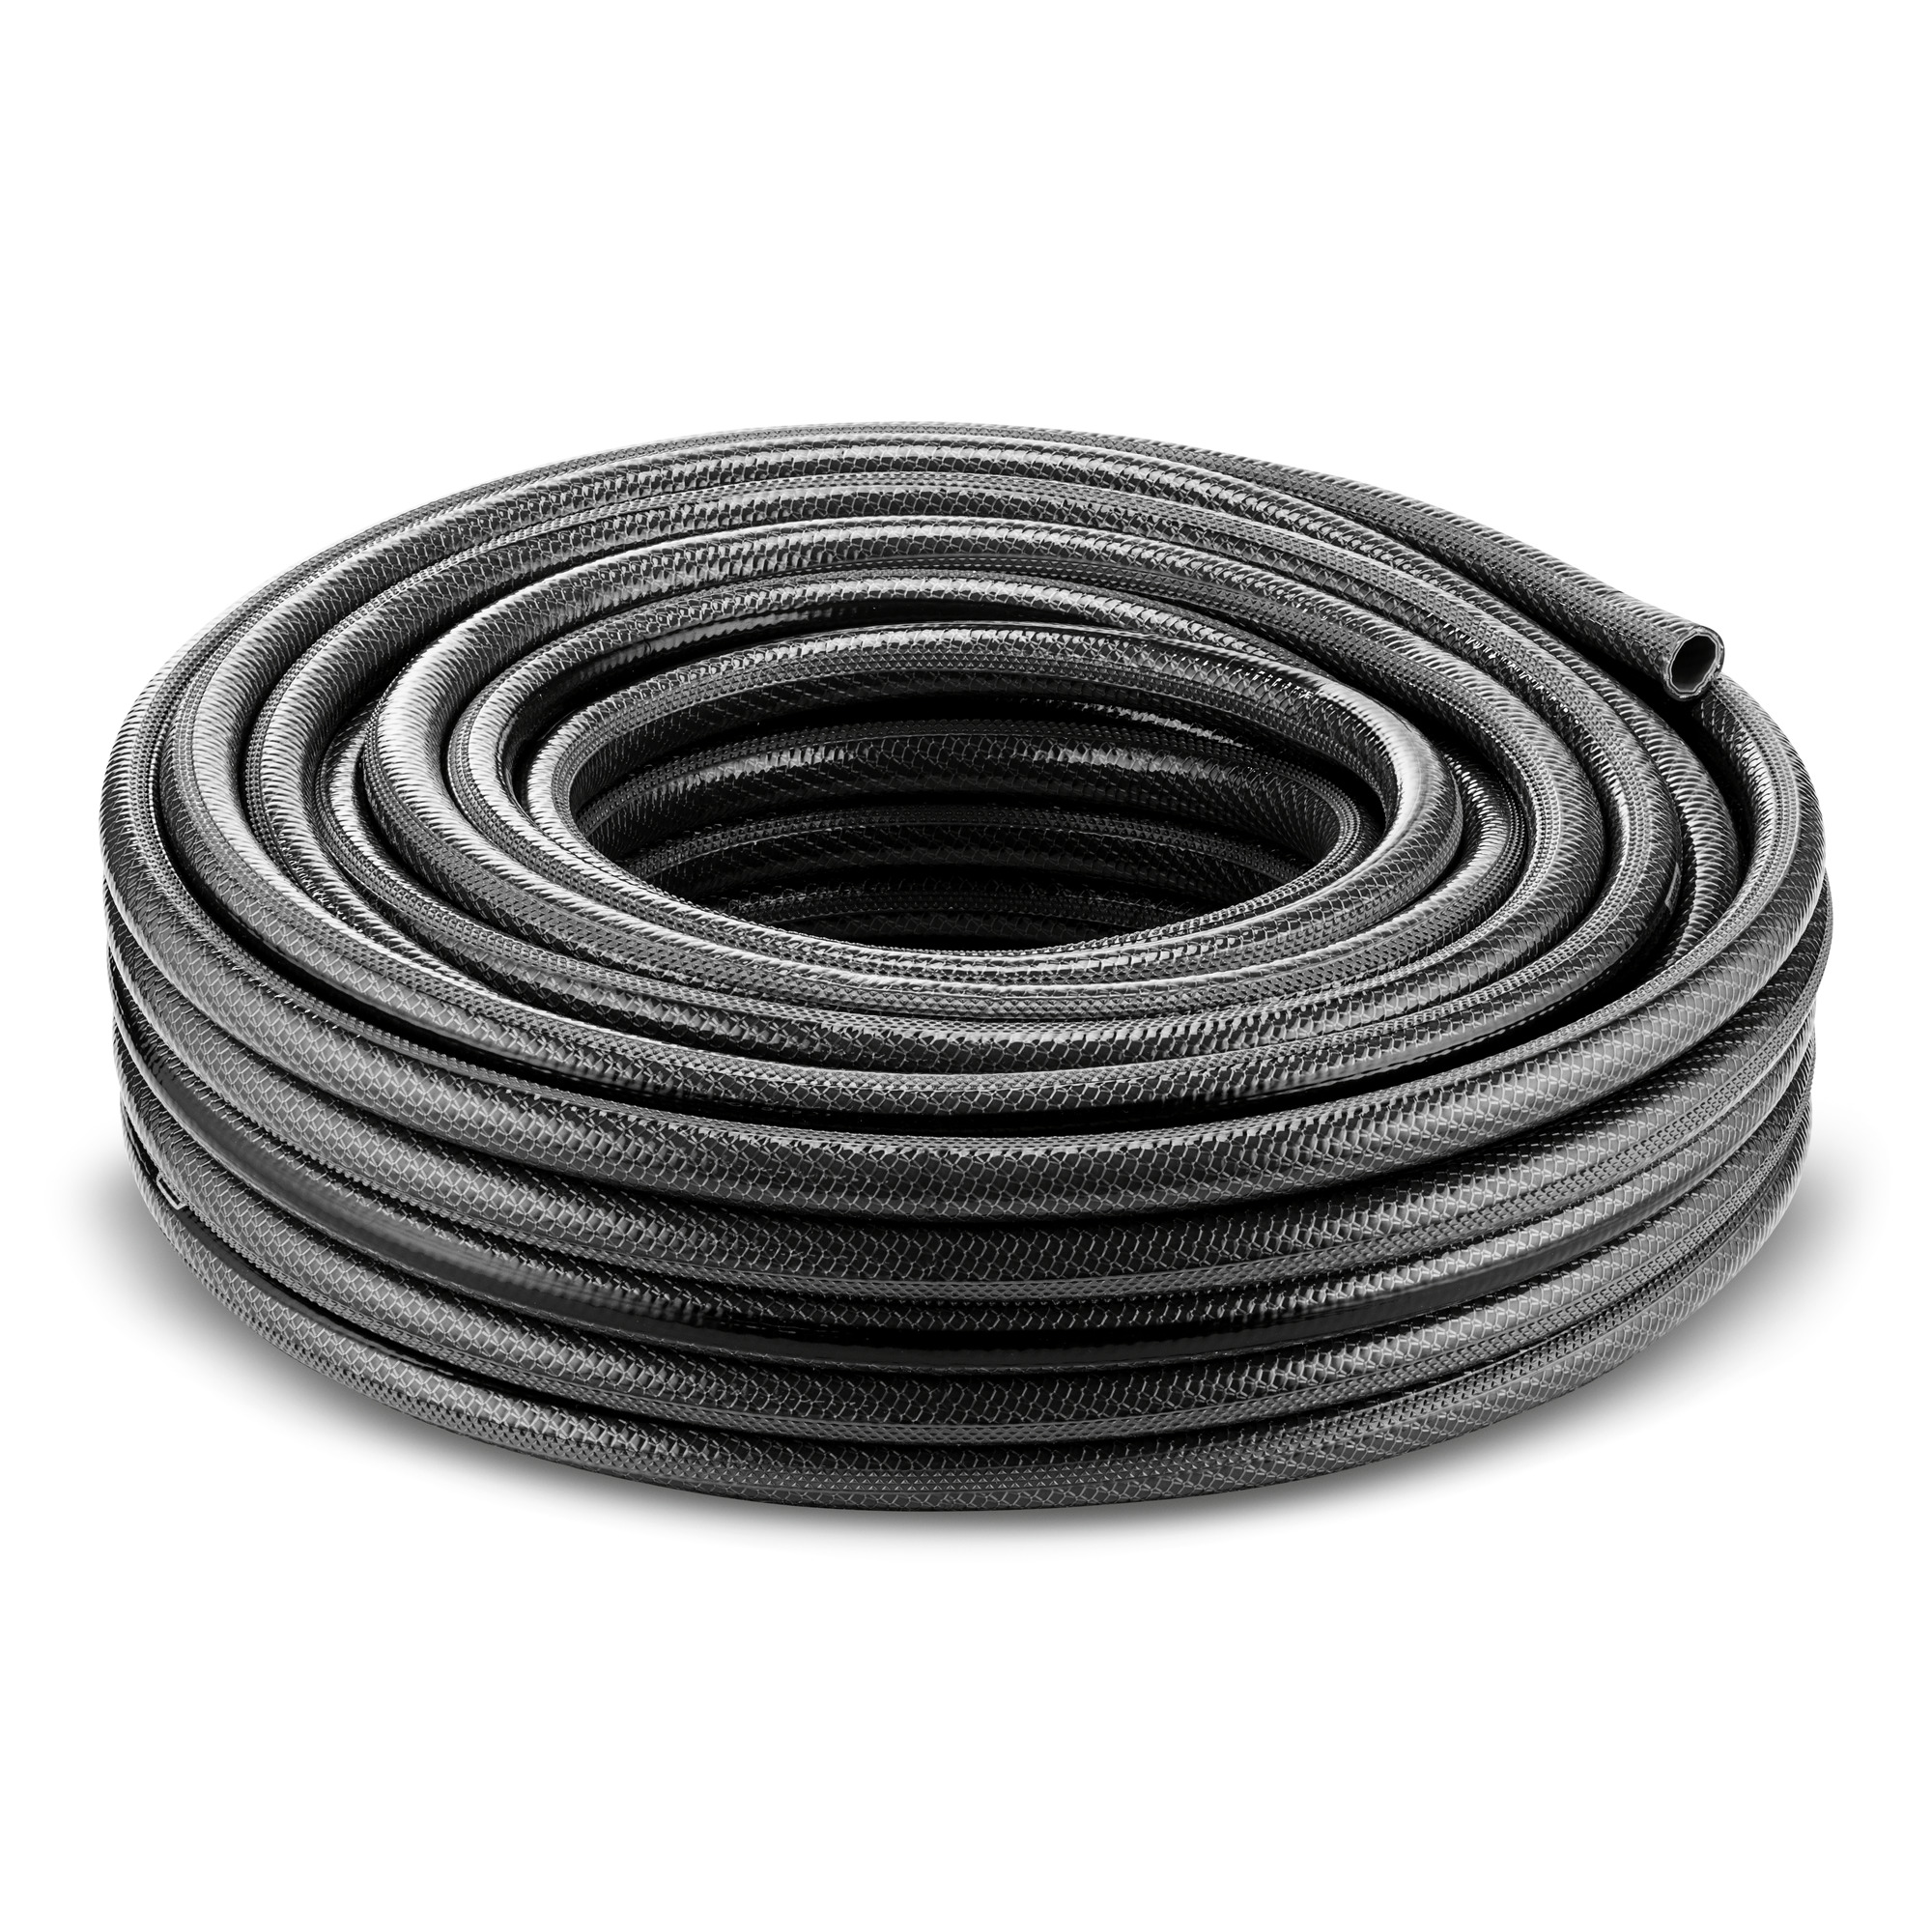 Kaercher Performance Premium hose, 1/2" -20 m